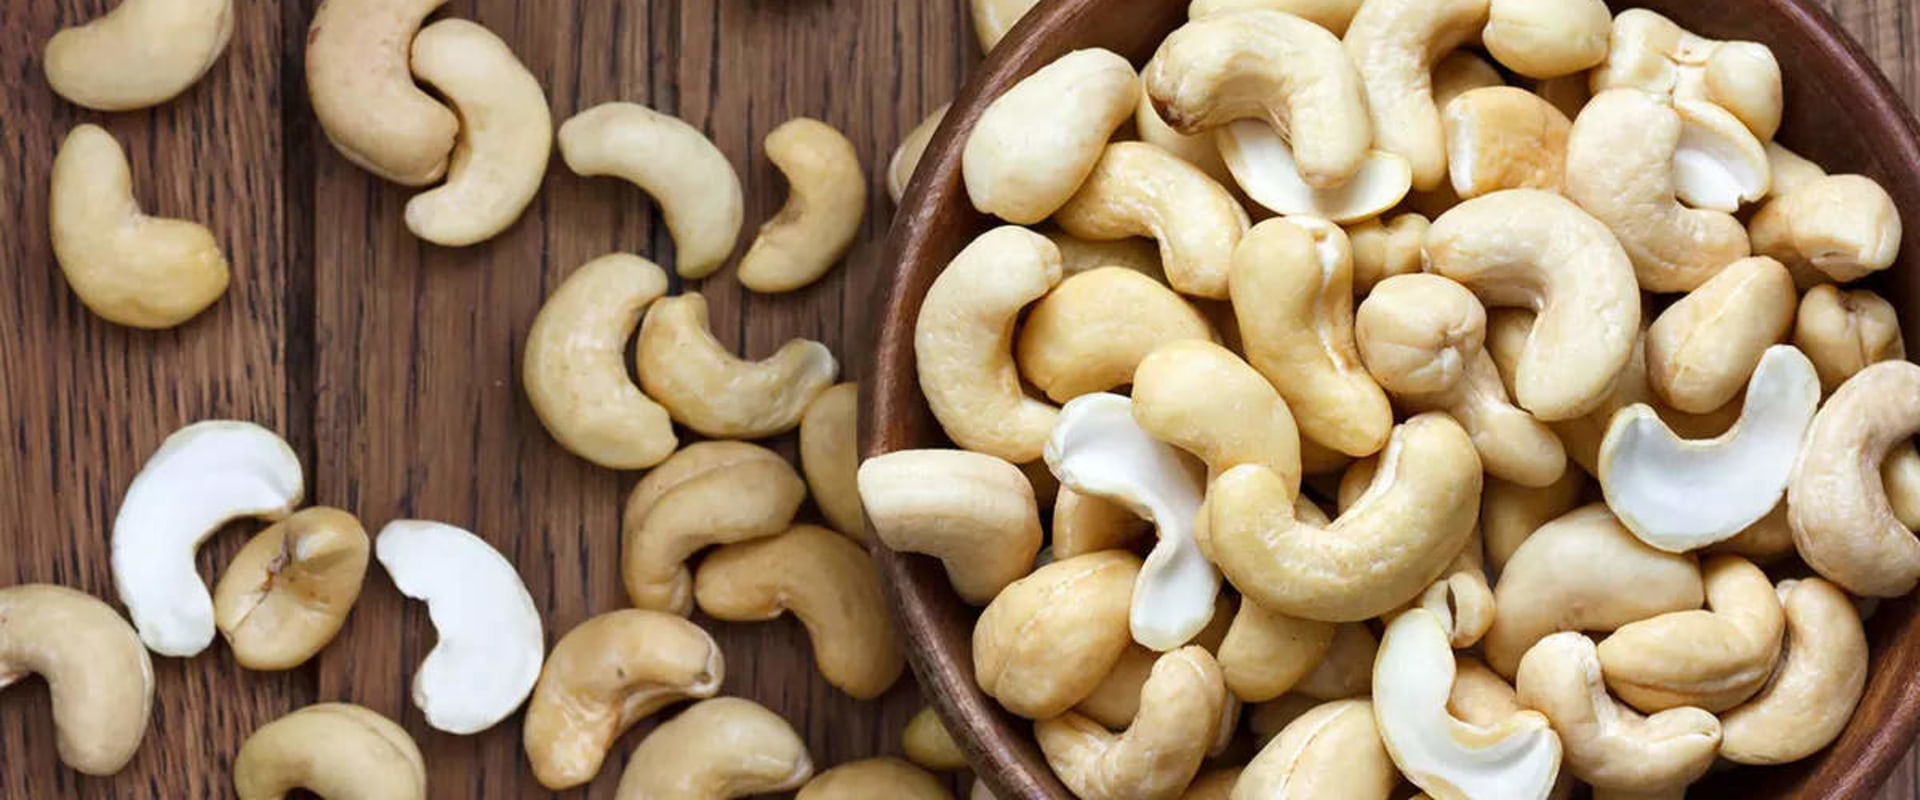 How long can you keep raw cashews?